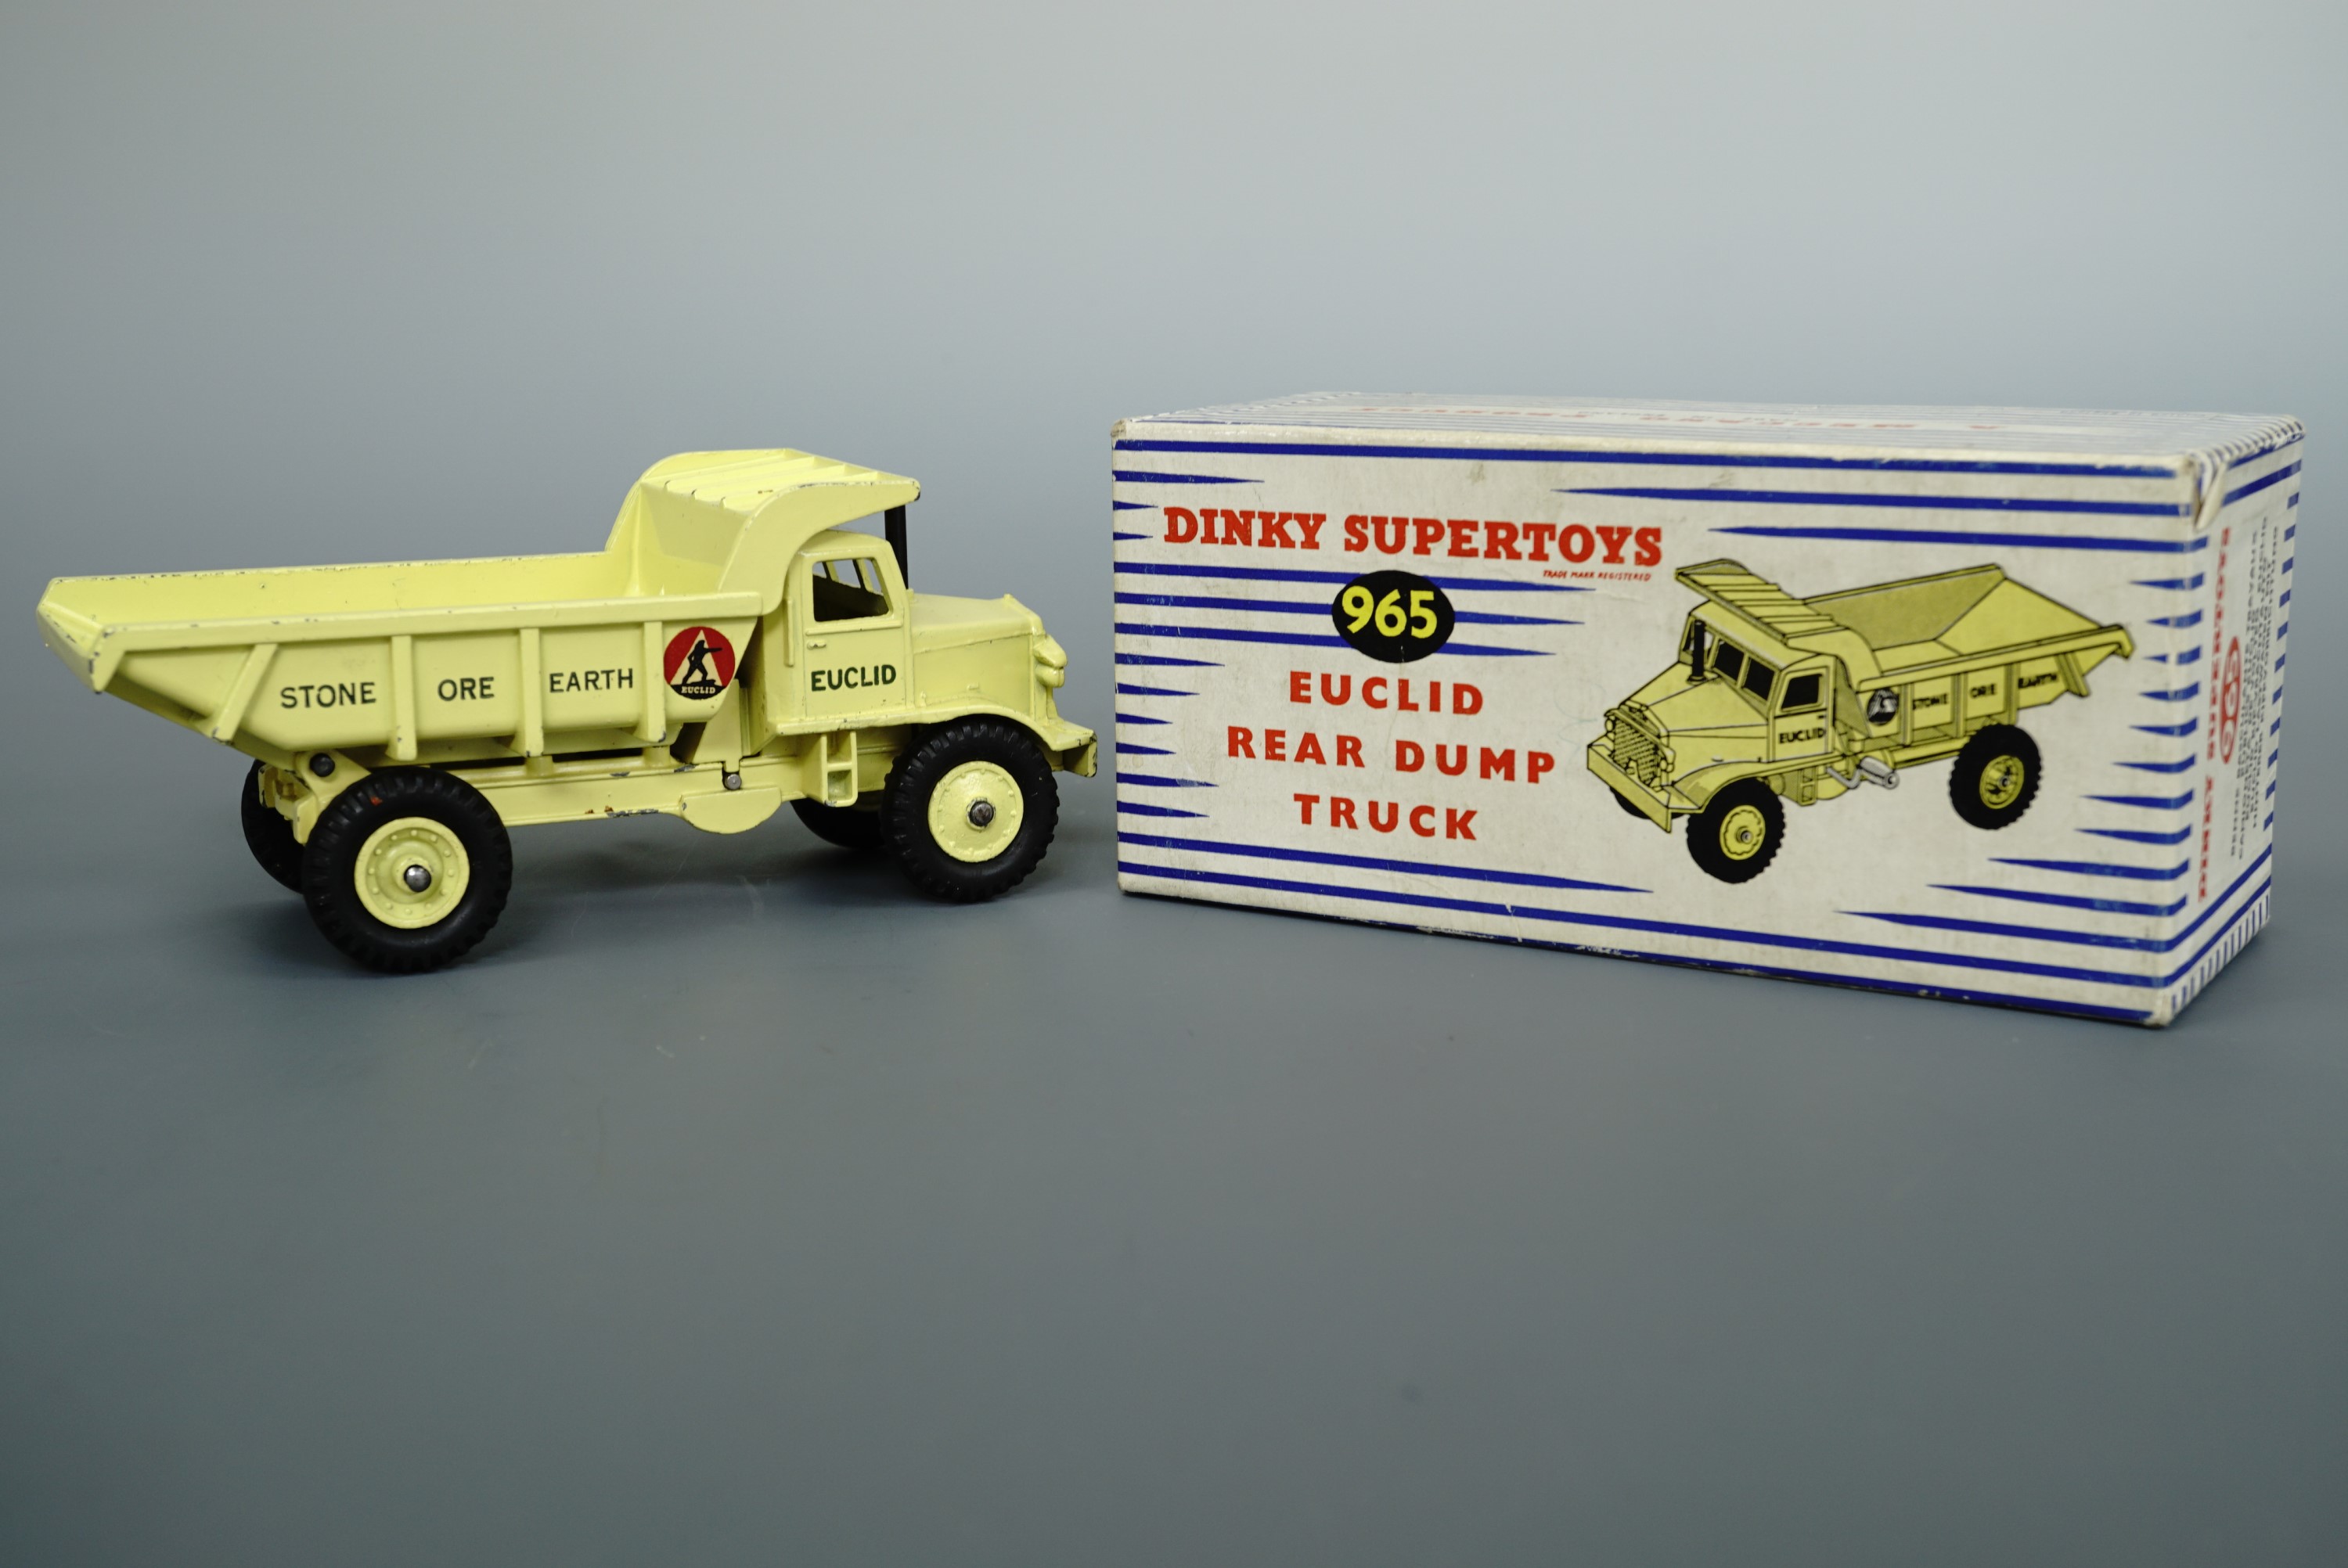 A Dinky Supertoys 965 Euclid Rear Dump Truck, in original carton - Image 2 of 2